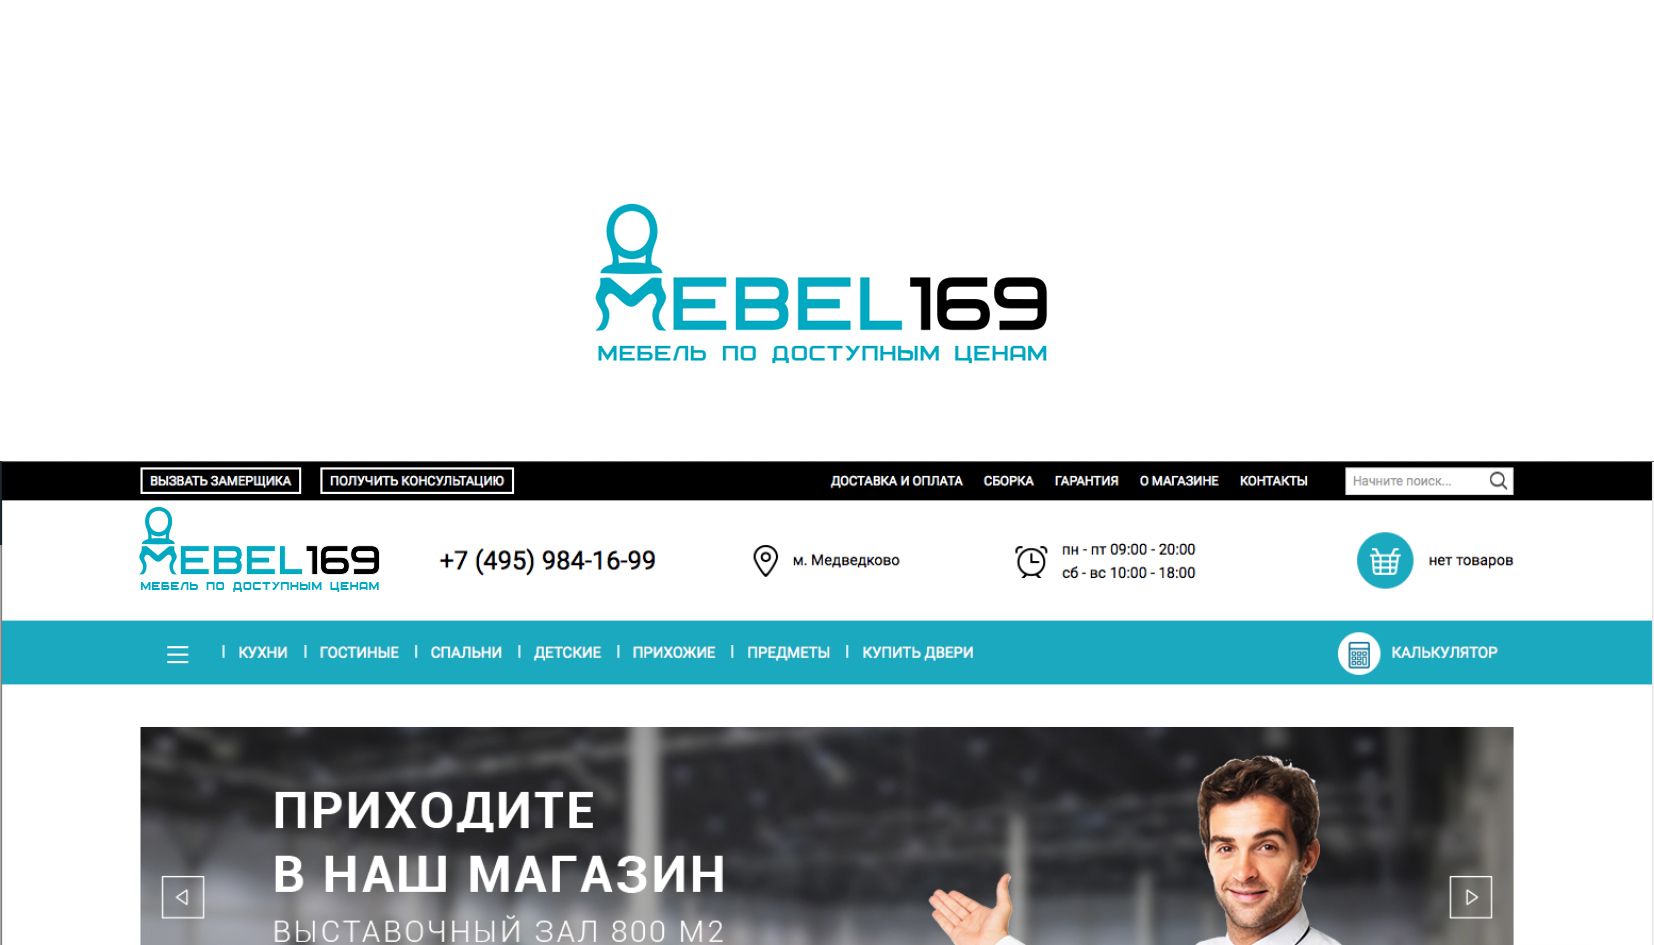 Логотип для Mebel169.ru - дизайнер andblin61